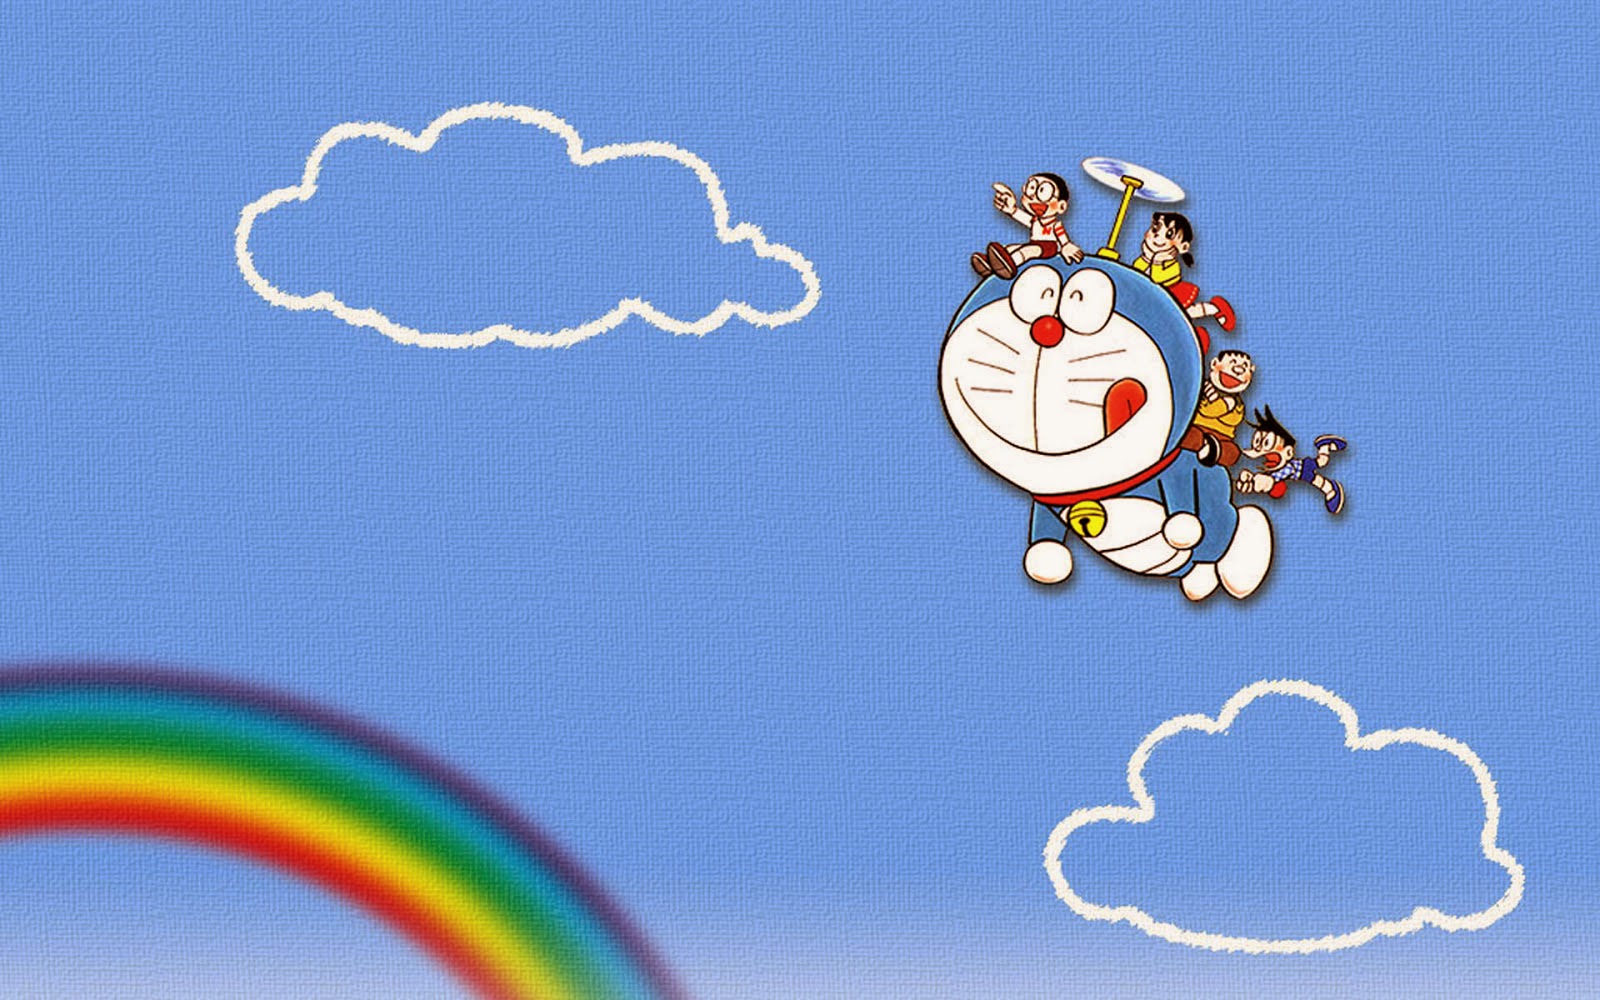 Wallpaper Gambar Kartun Doraemon Terlengkap Gambar Kartun